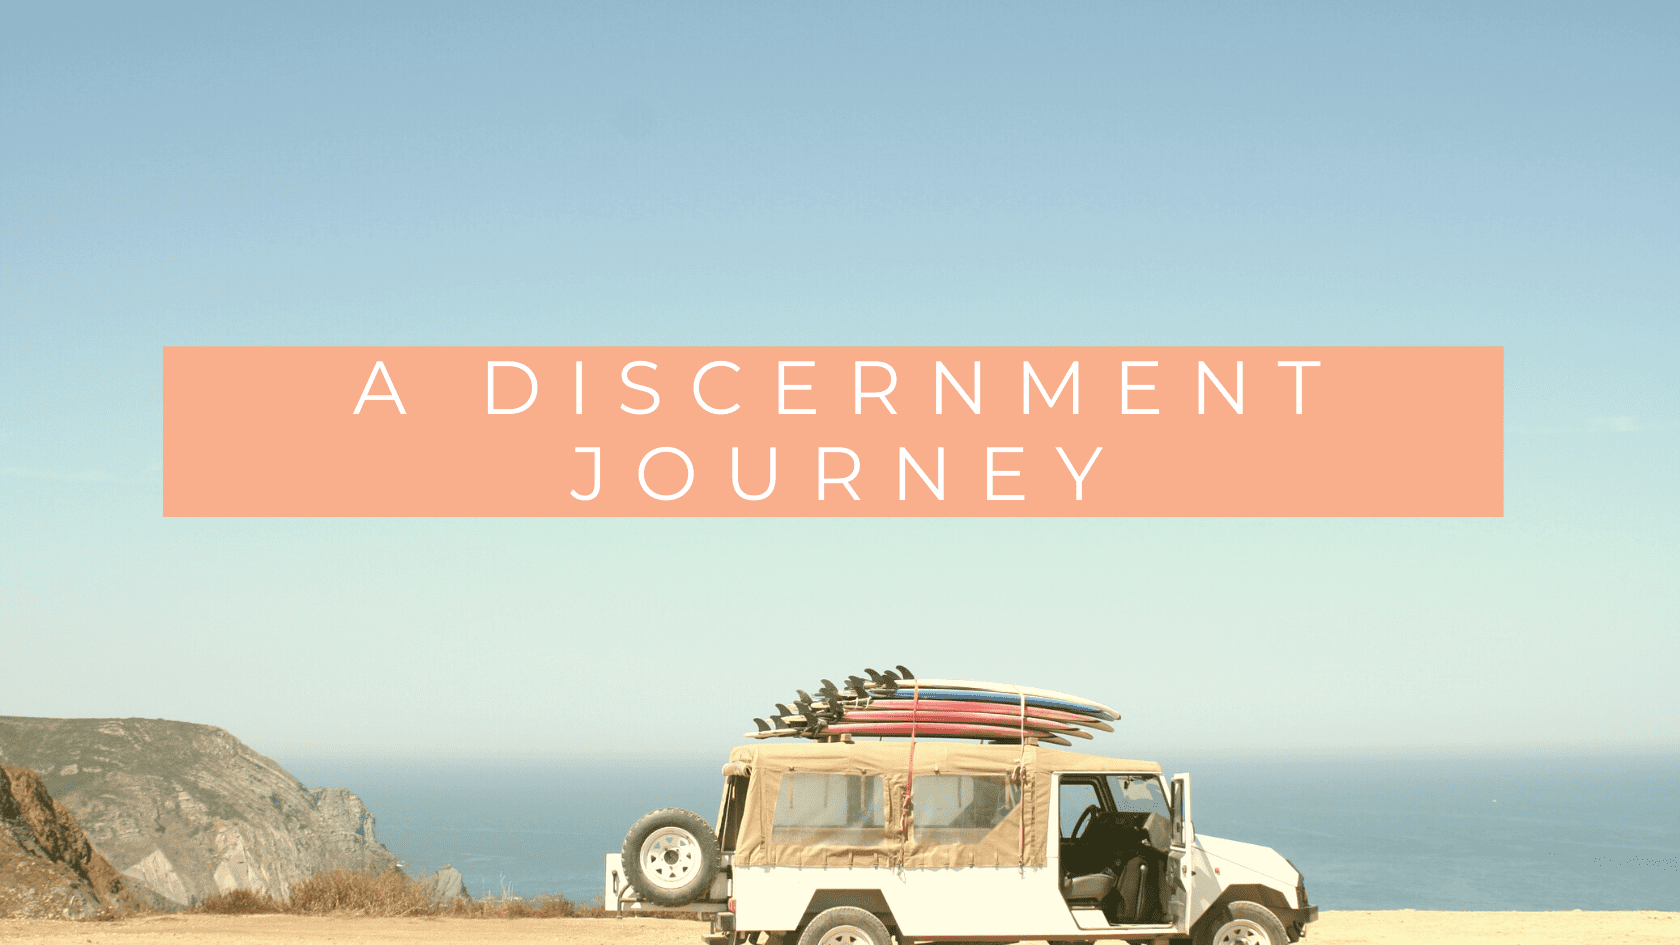 Discernment Journey Blog Post Image